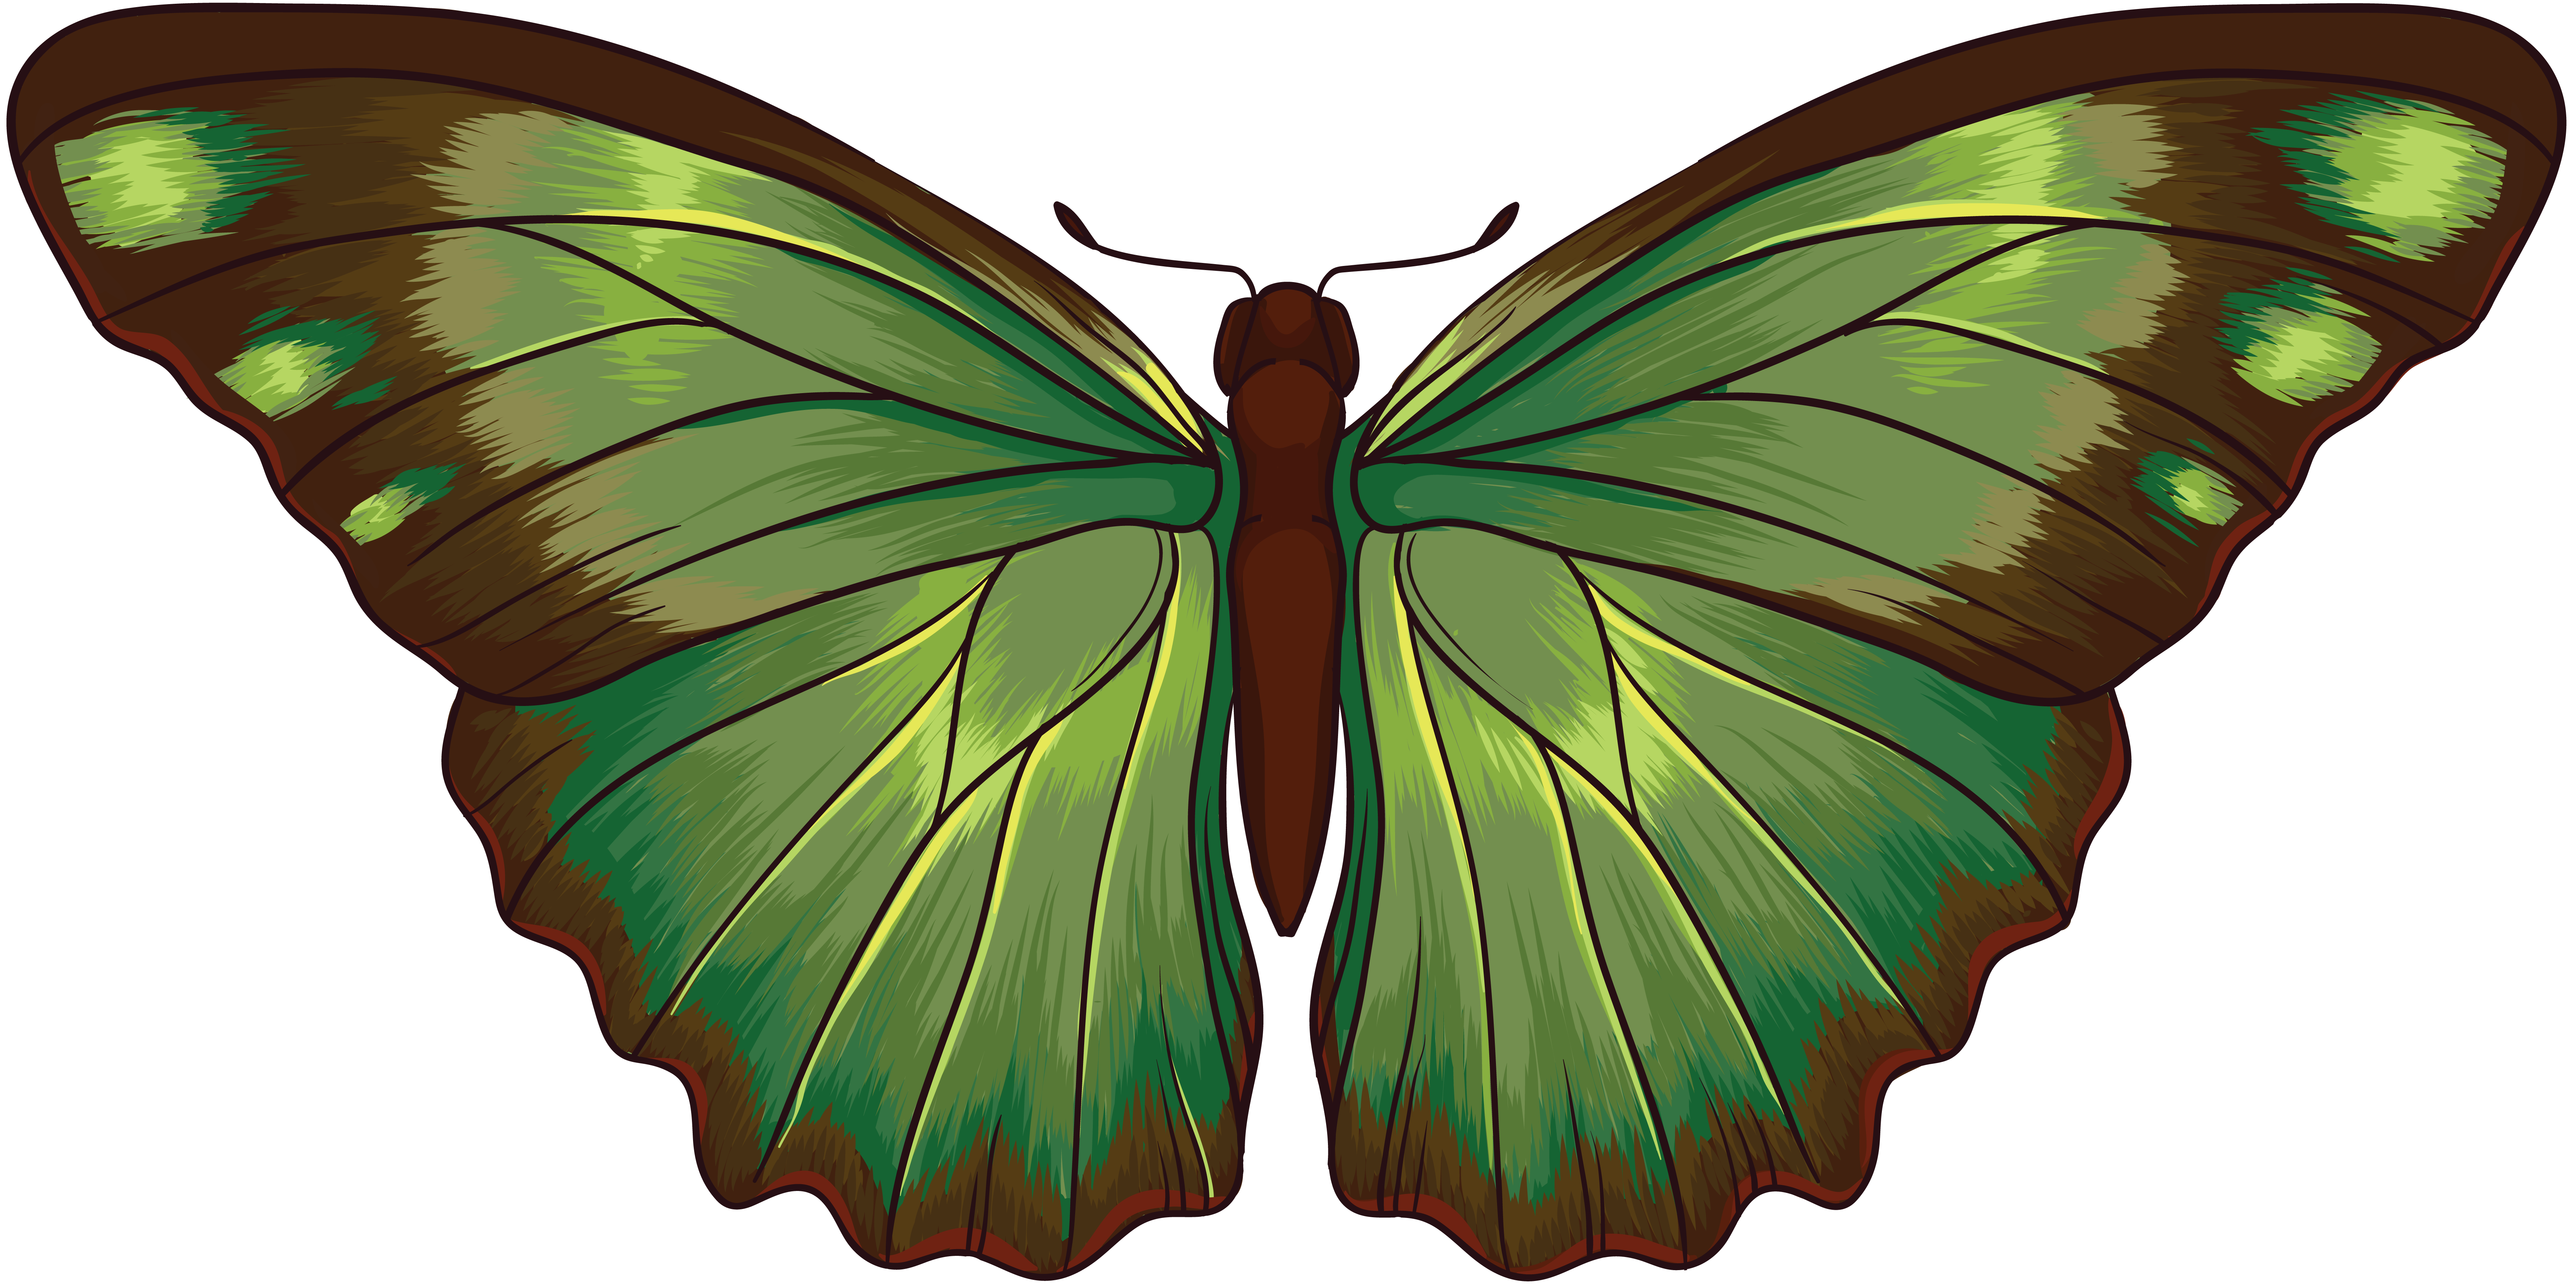 Farfalla verde